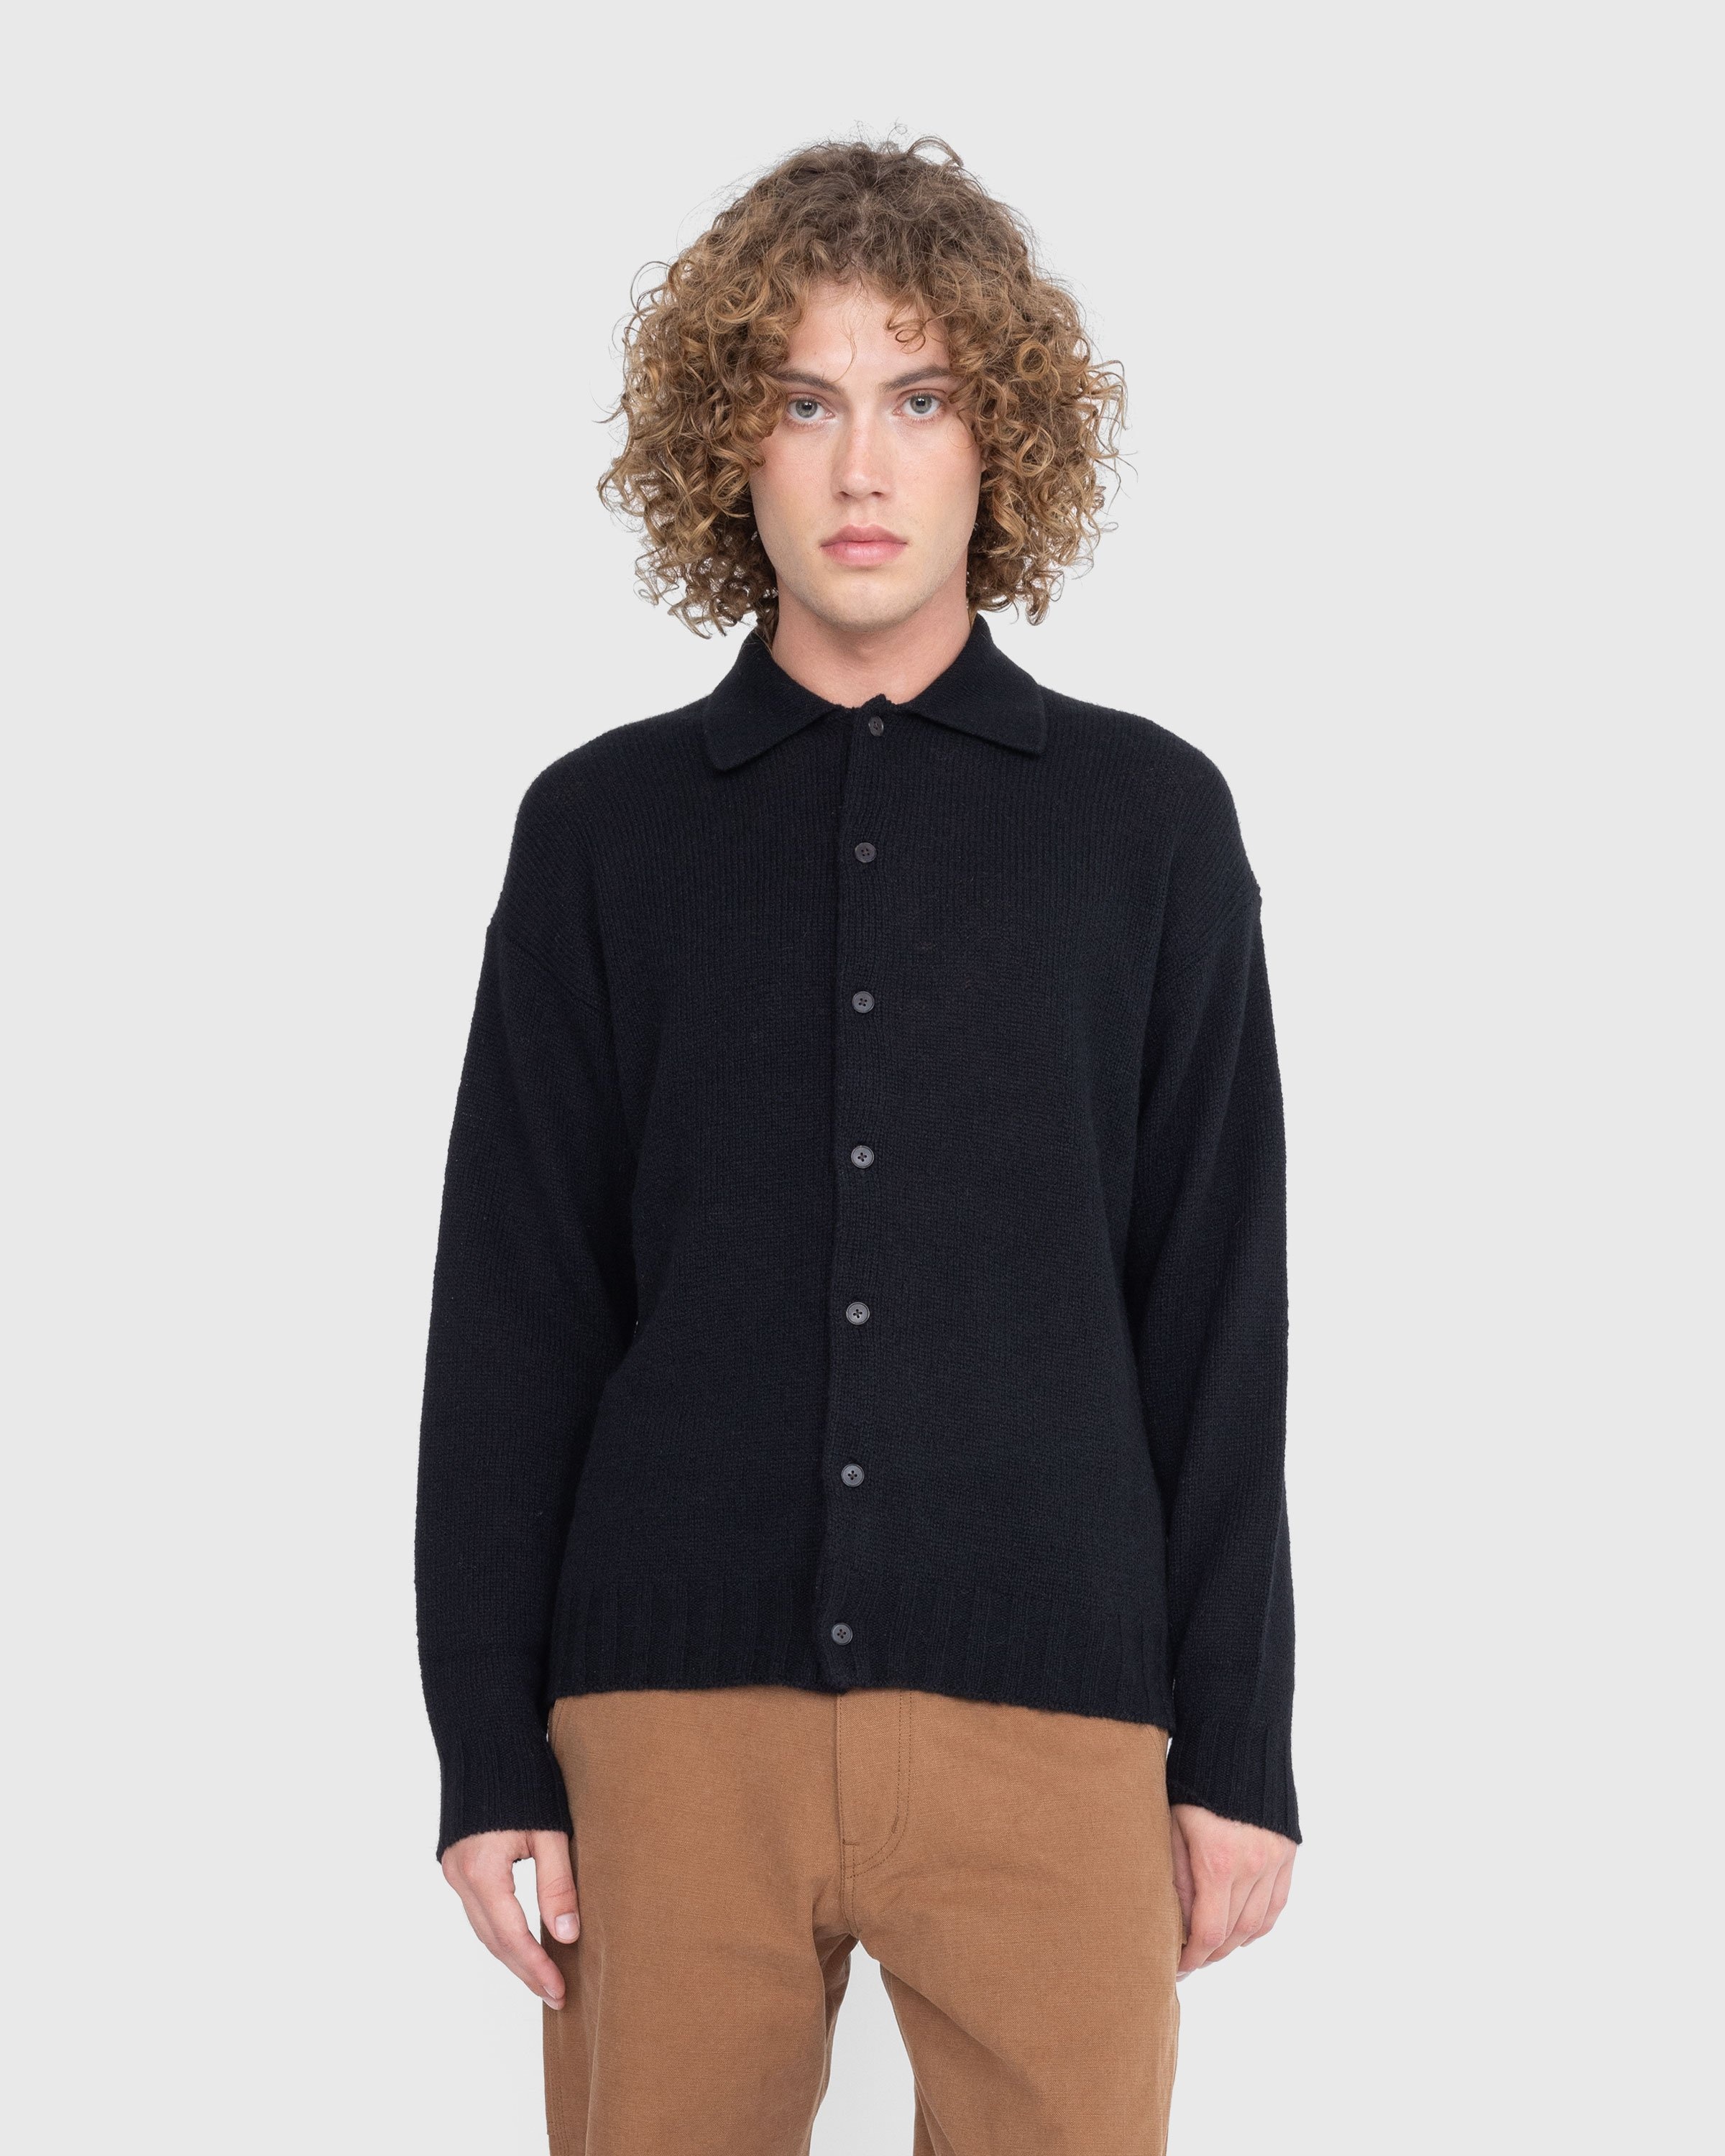 Auralee – Shetland Wool Cashmere Knit Cardigan Black - Knitwear - Black - Image 2